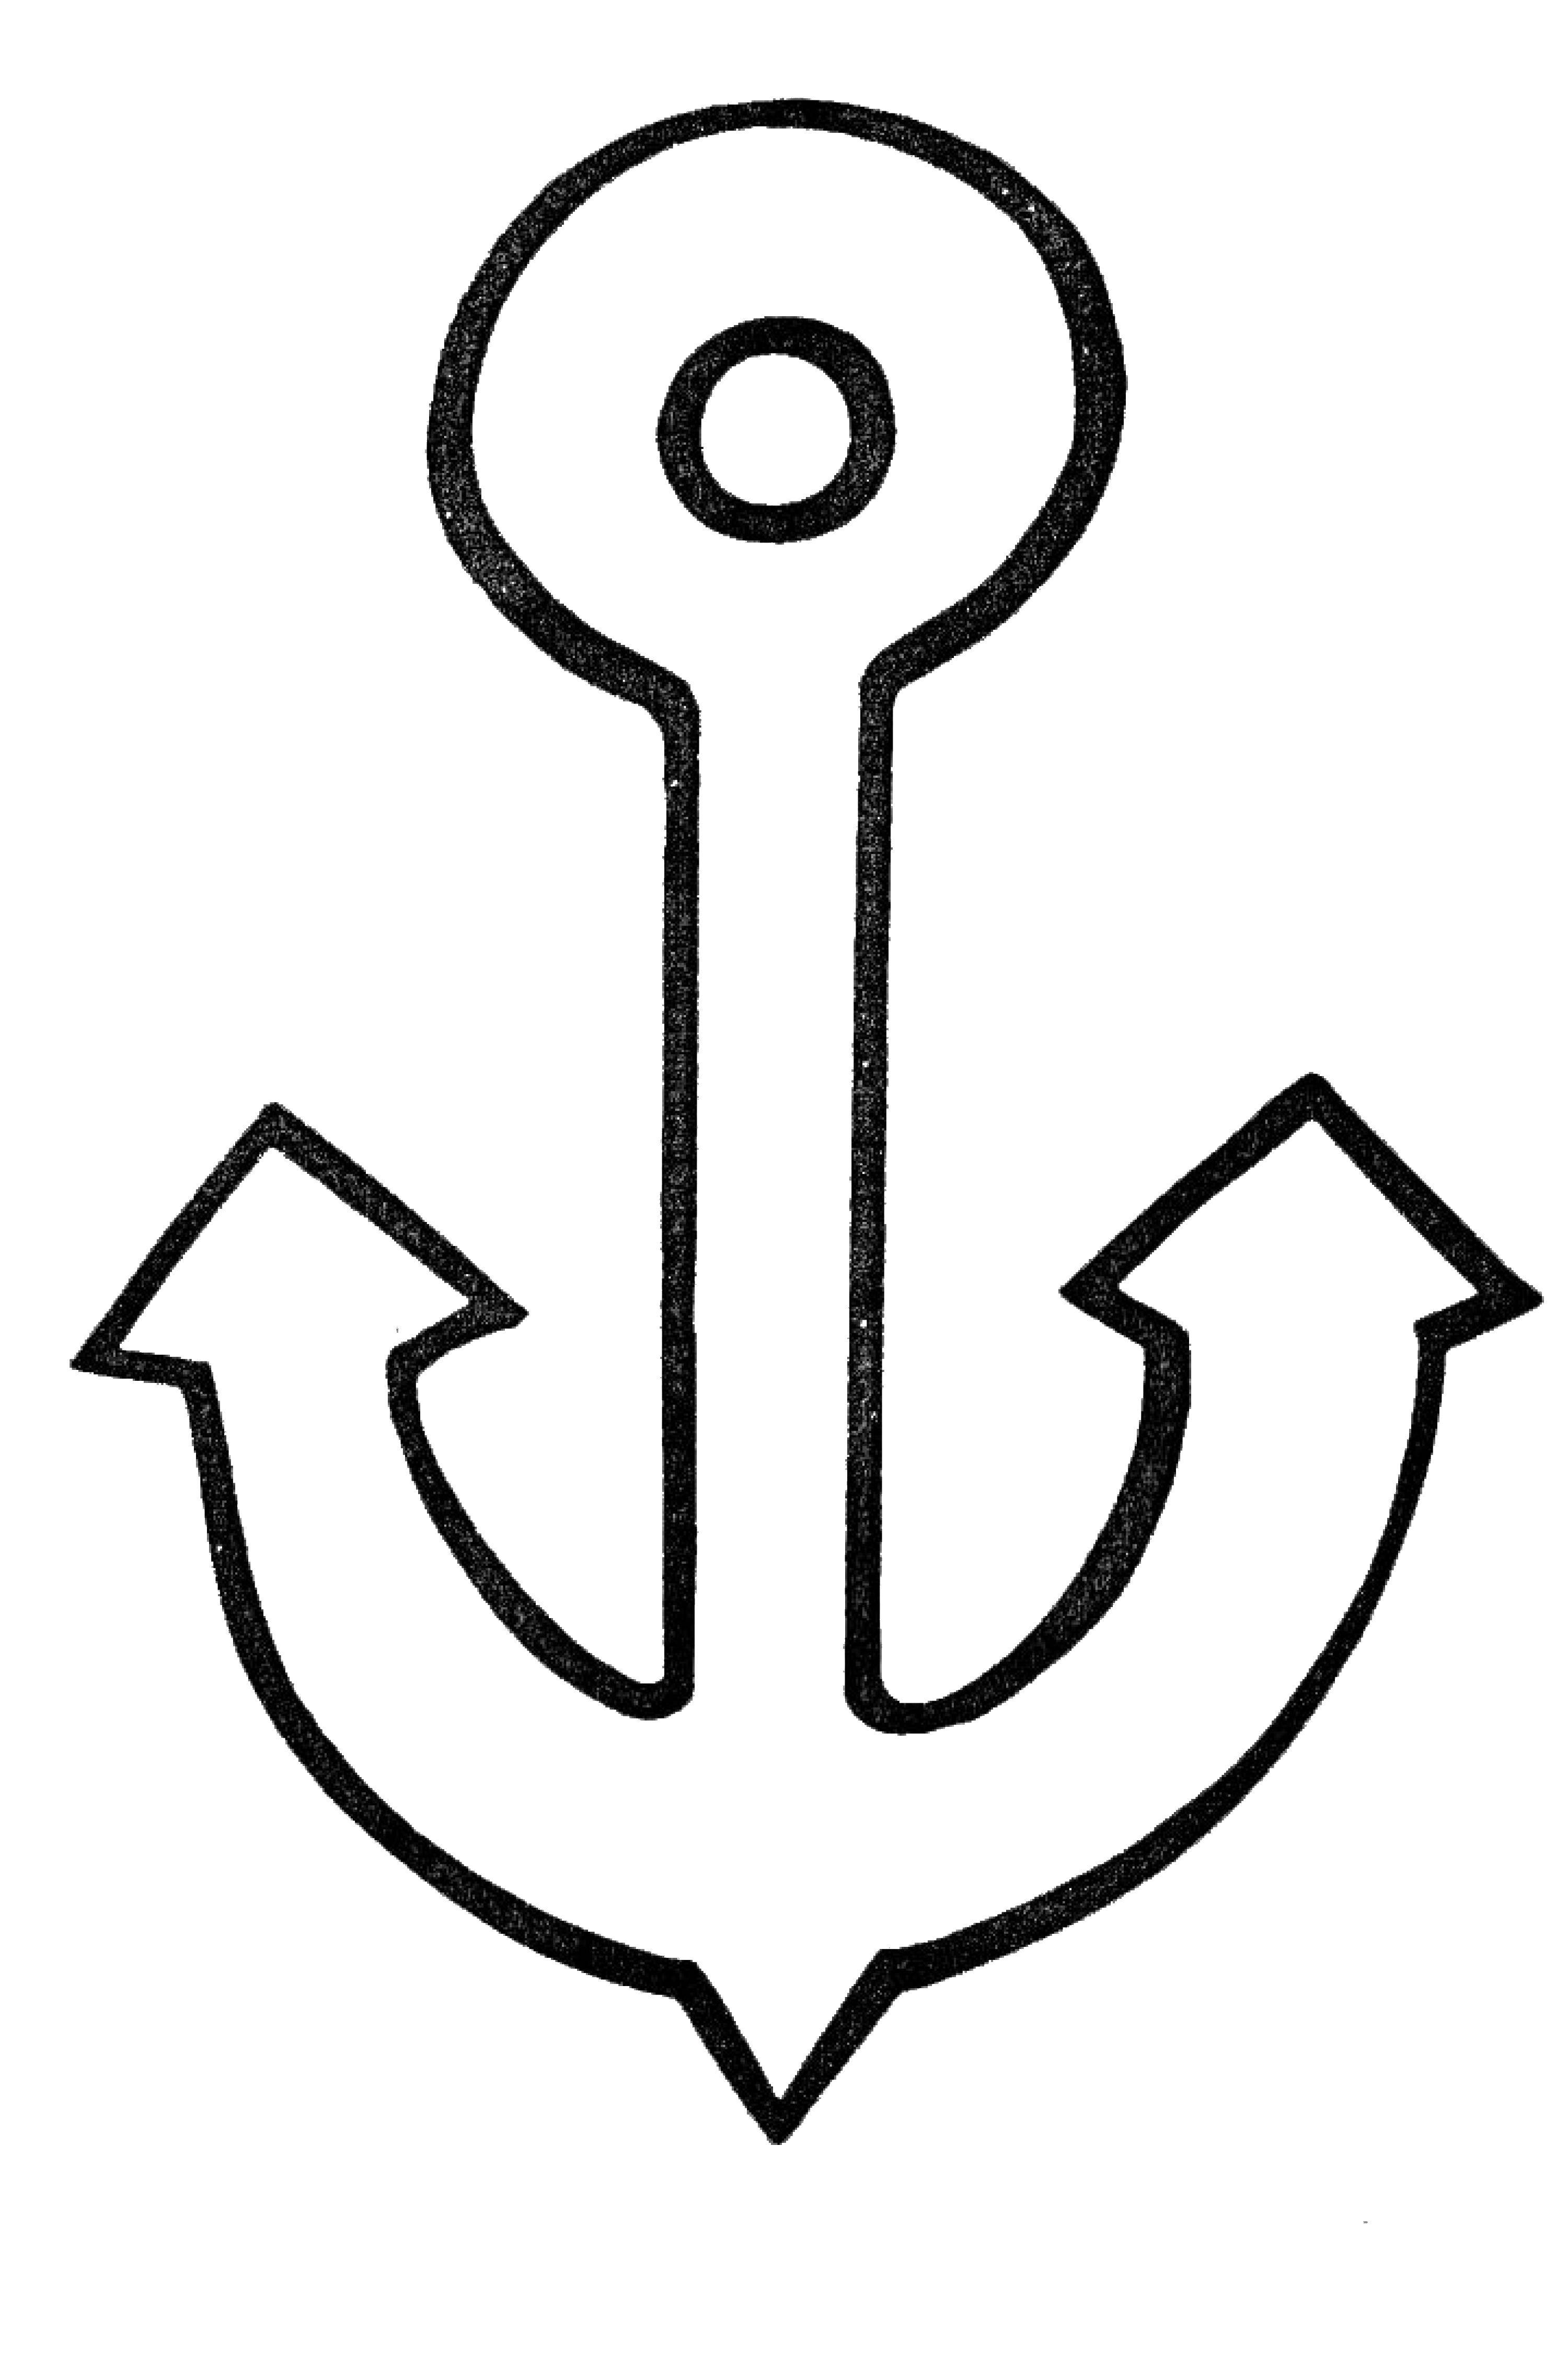 Coloring Anchor. Category anchor. Tags:  marine, anchor.